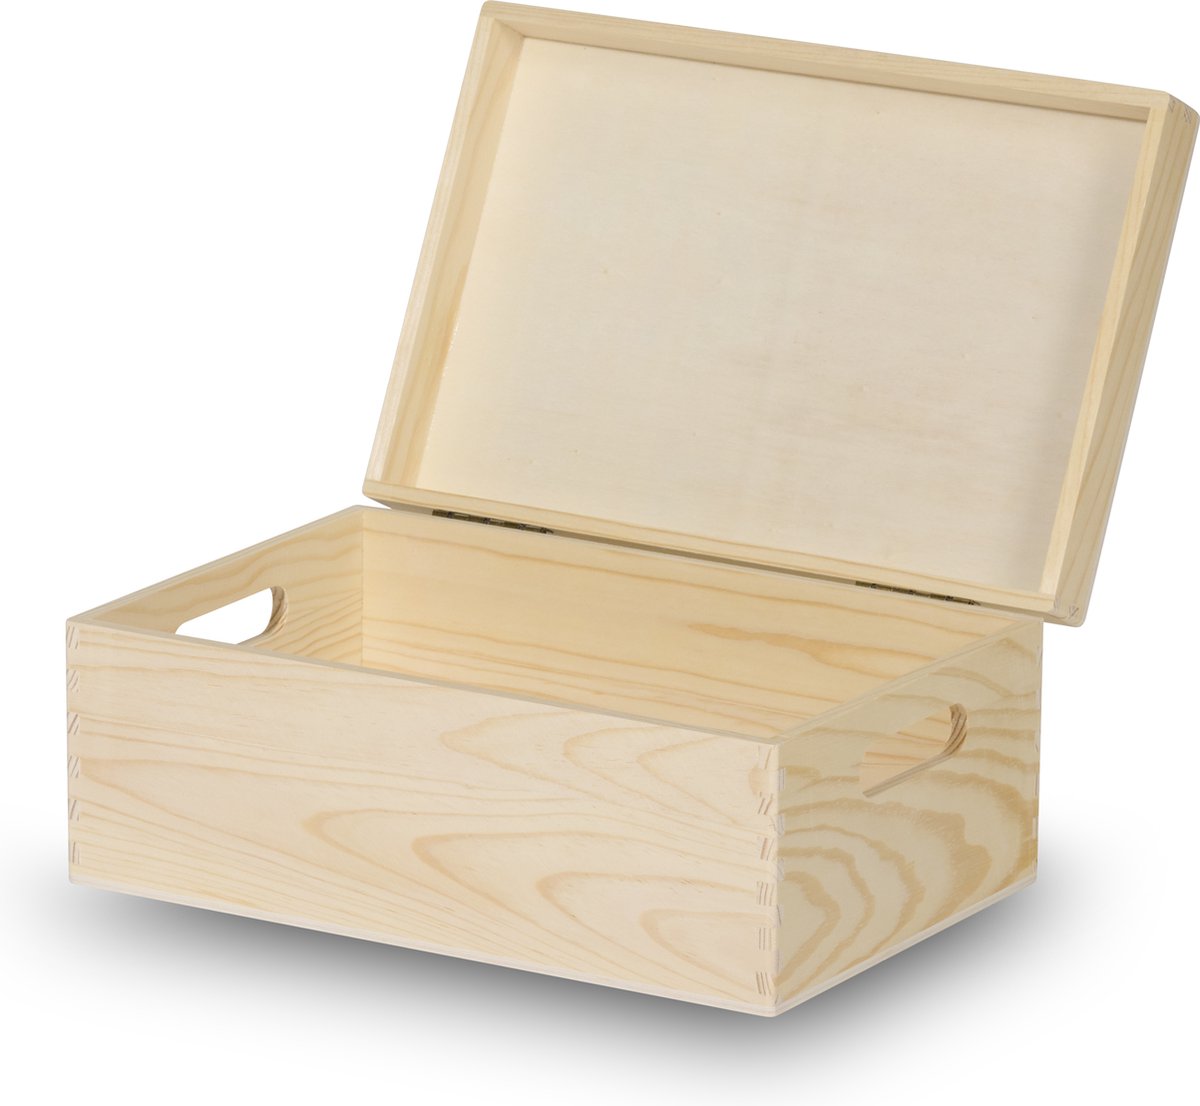 Houten kist | houten kist met deksel | 30x20x13cm | houten opbergkist | speelgoedkist | handvatten | documenten | speelgoed | herinneringenbox | herinneringenkist | houten box | Top kwaliteit